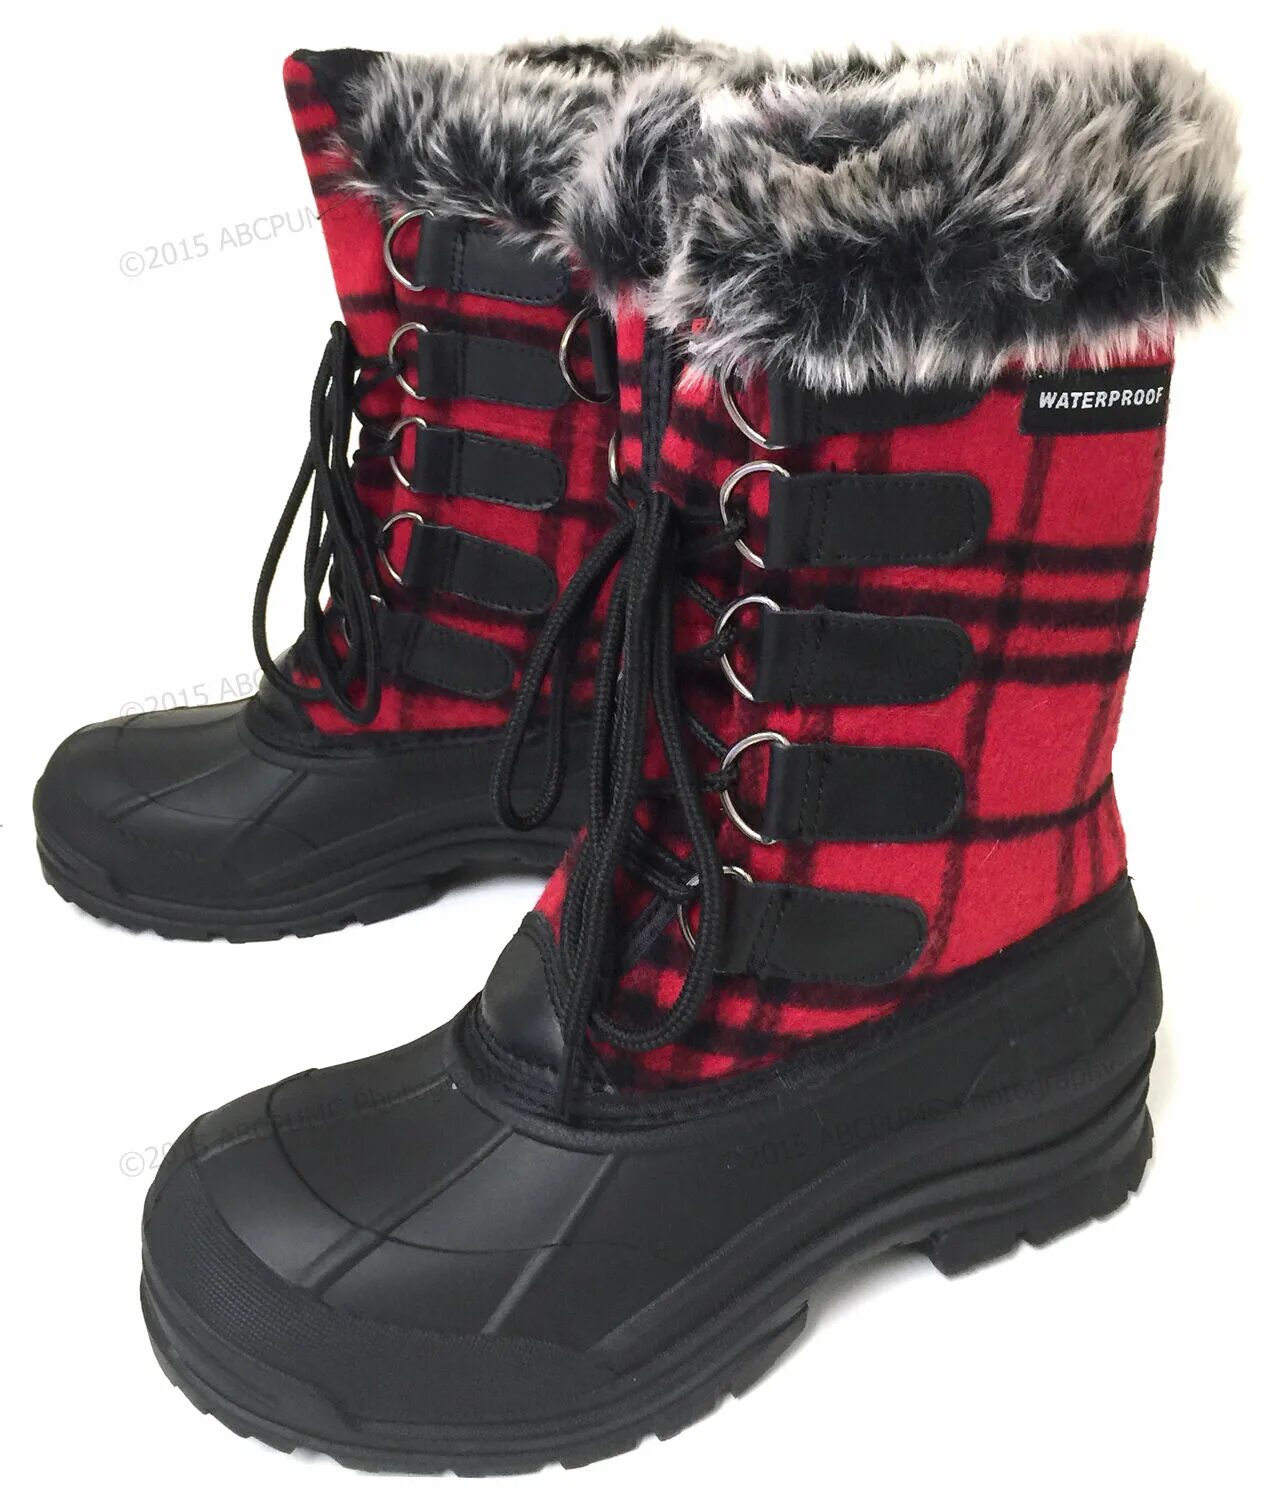 Ботинки warm. Сапоги warm Boots. Сапоги warm Boots пенные. Ботинки женские утеплённые Colorado fur women’s Insulated Boots. Boots for warming up.